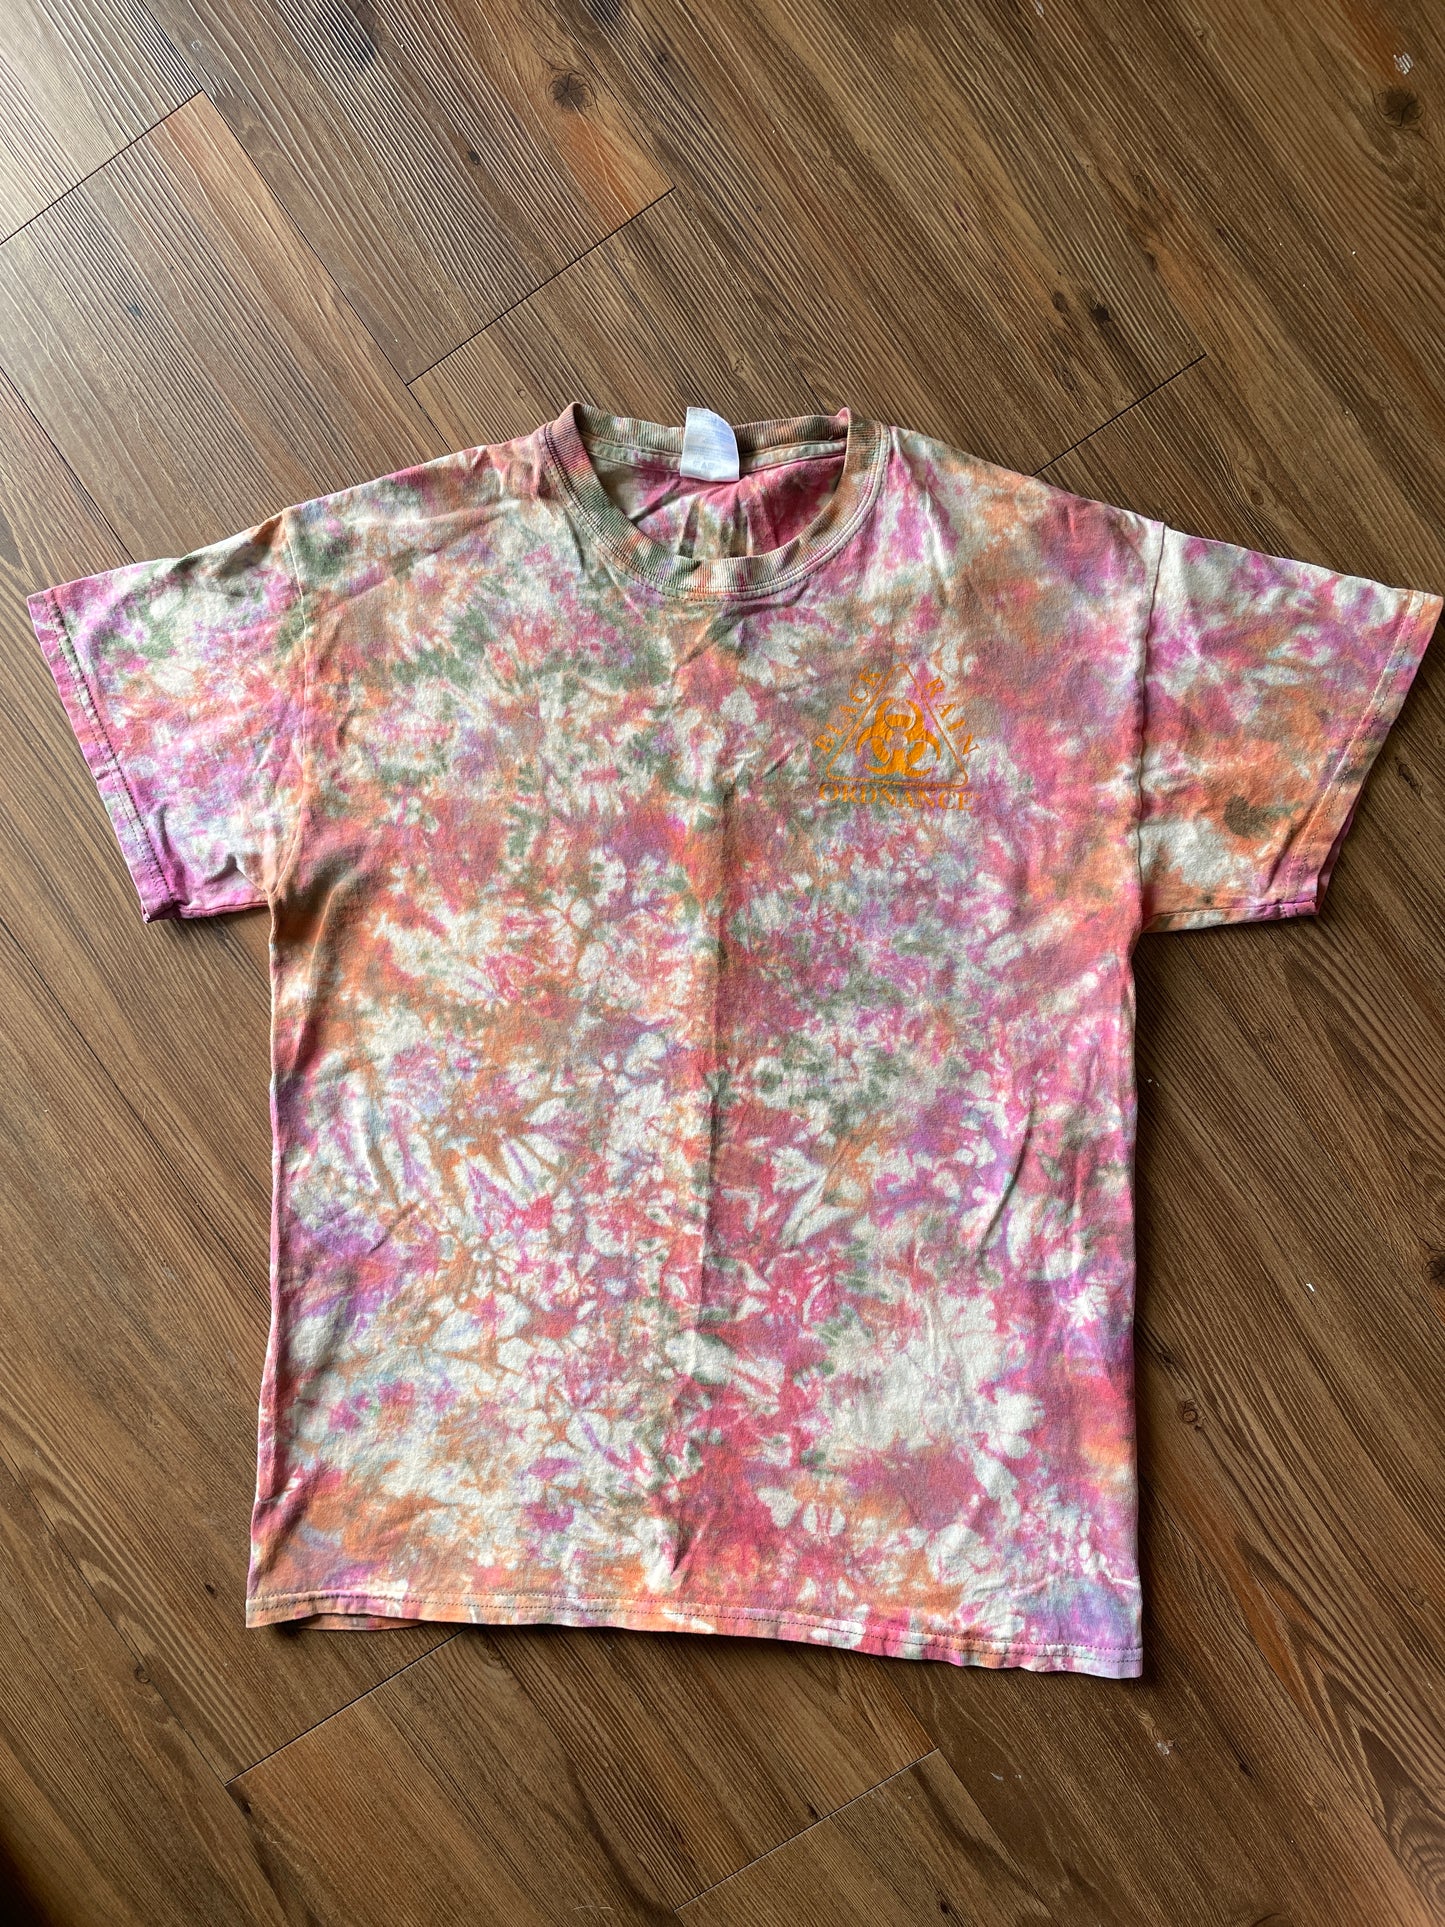 MEDIUM Men’s Black Rain Ordinance Tie Dye T-Shirt | Orange and Pink Reverse Tie Dye Short Sleeve